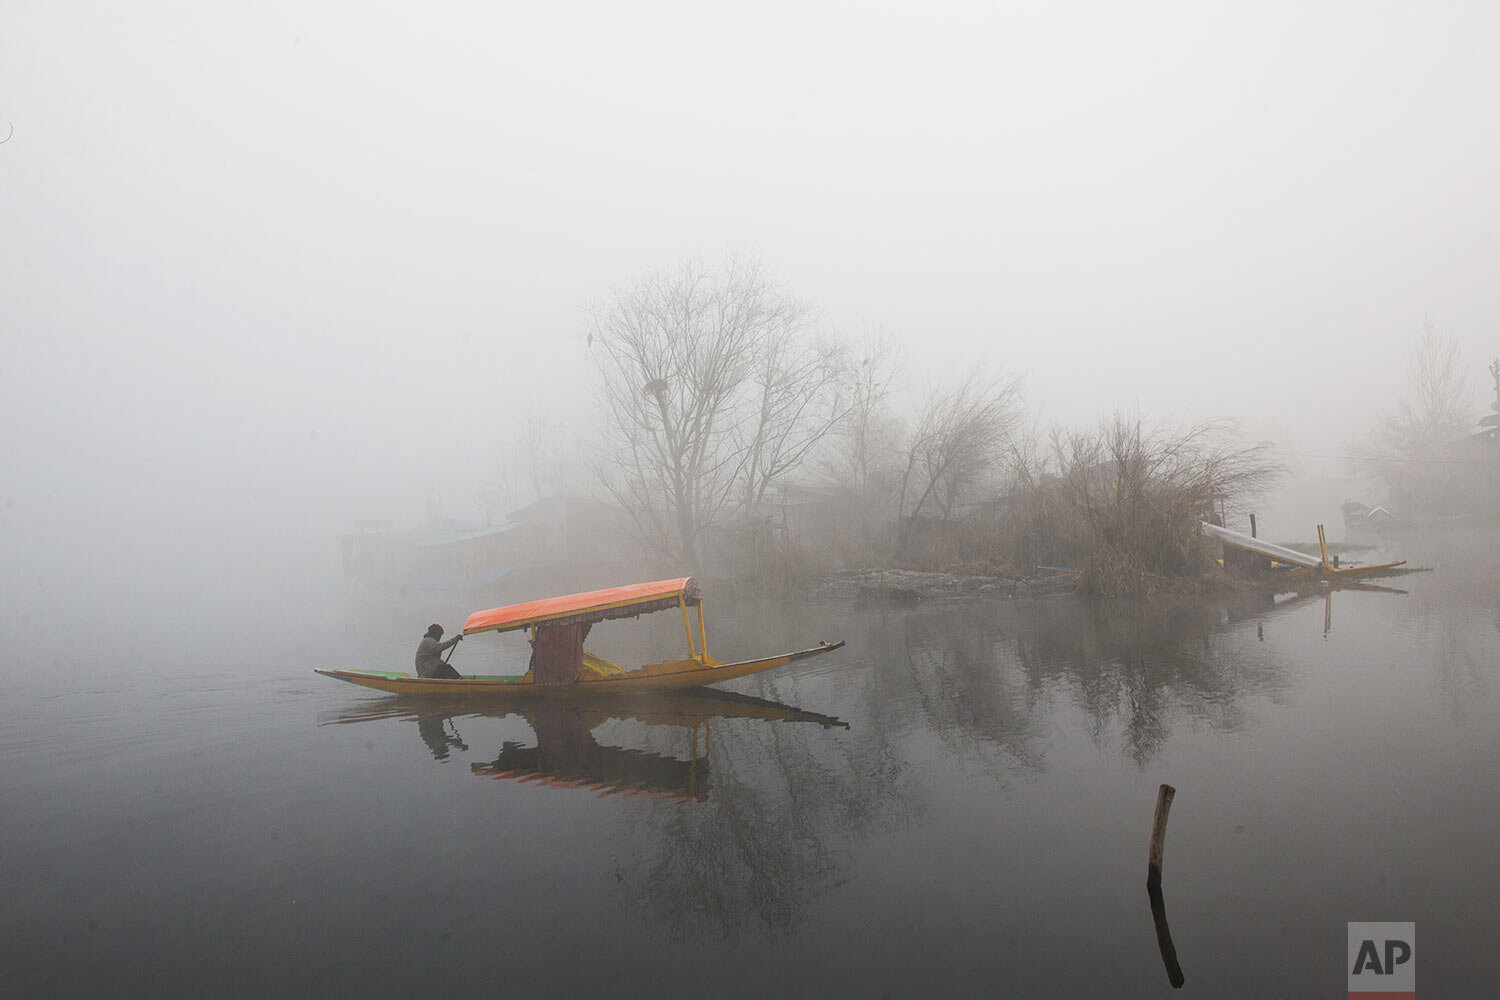  A Kashmiri boatman rows his boat on the Dal Lake surrounded by dense fog on a cold morning in Srinagar, Indian controlled Kashmir, Saturday, Dec. 7, 2019. (AP Photo/ Dar Yasin) 